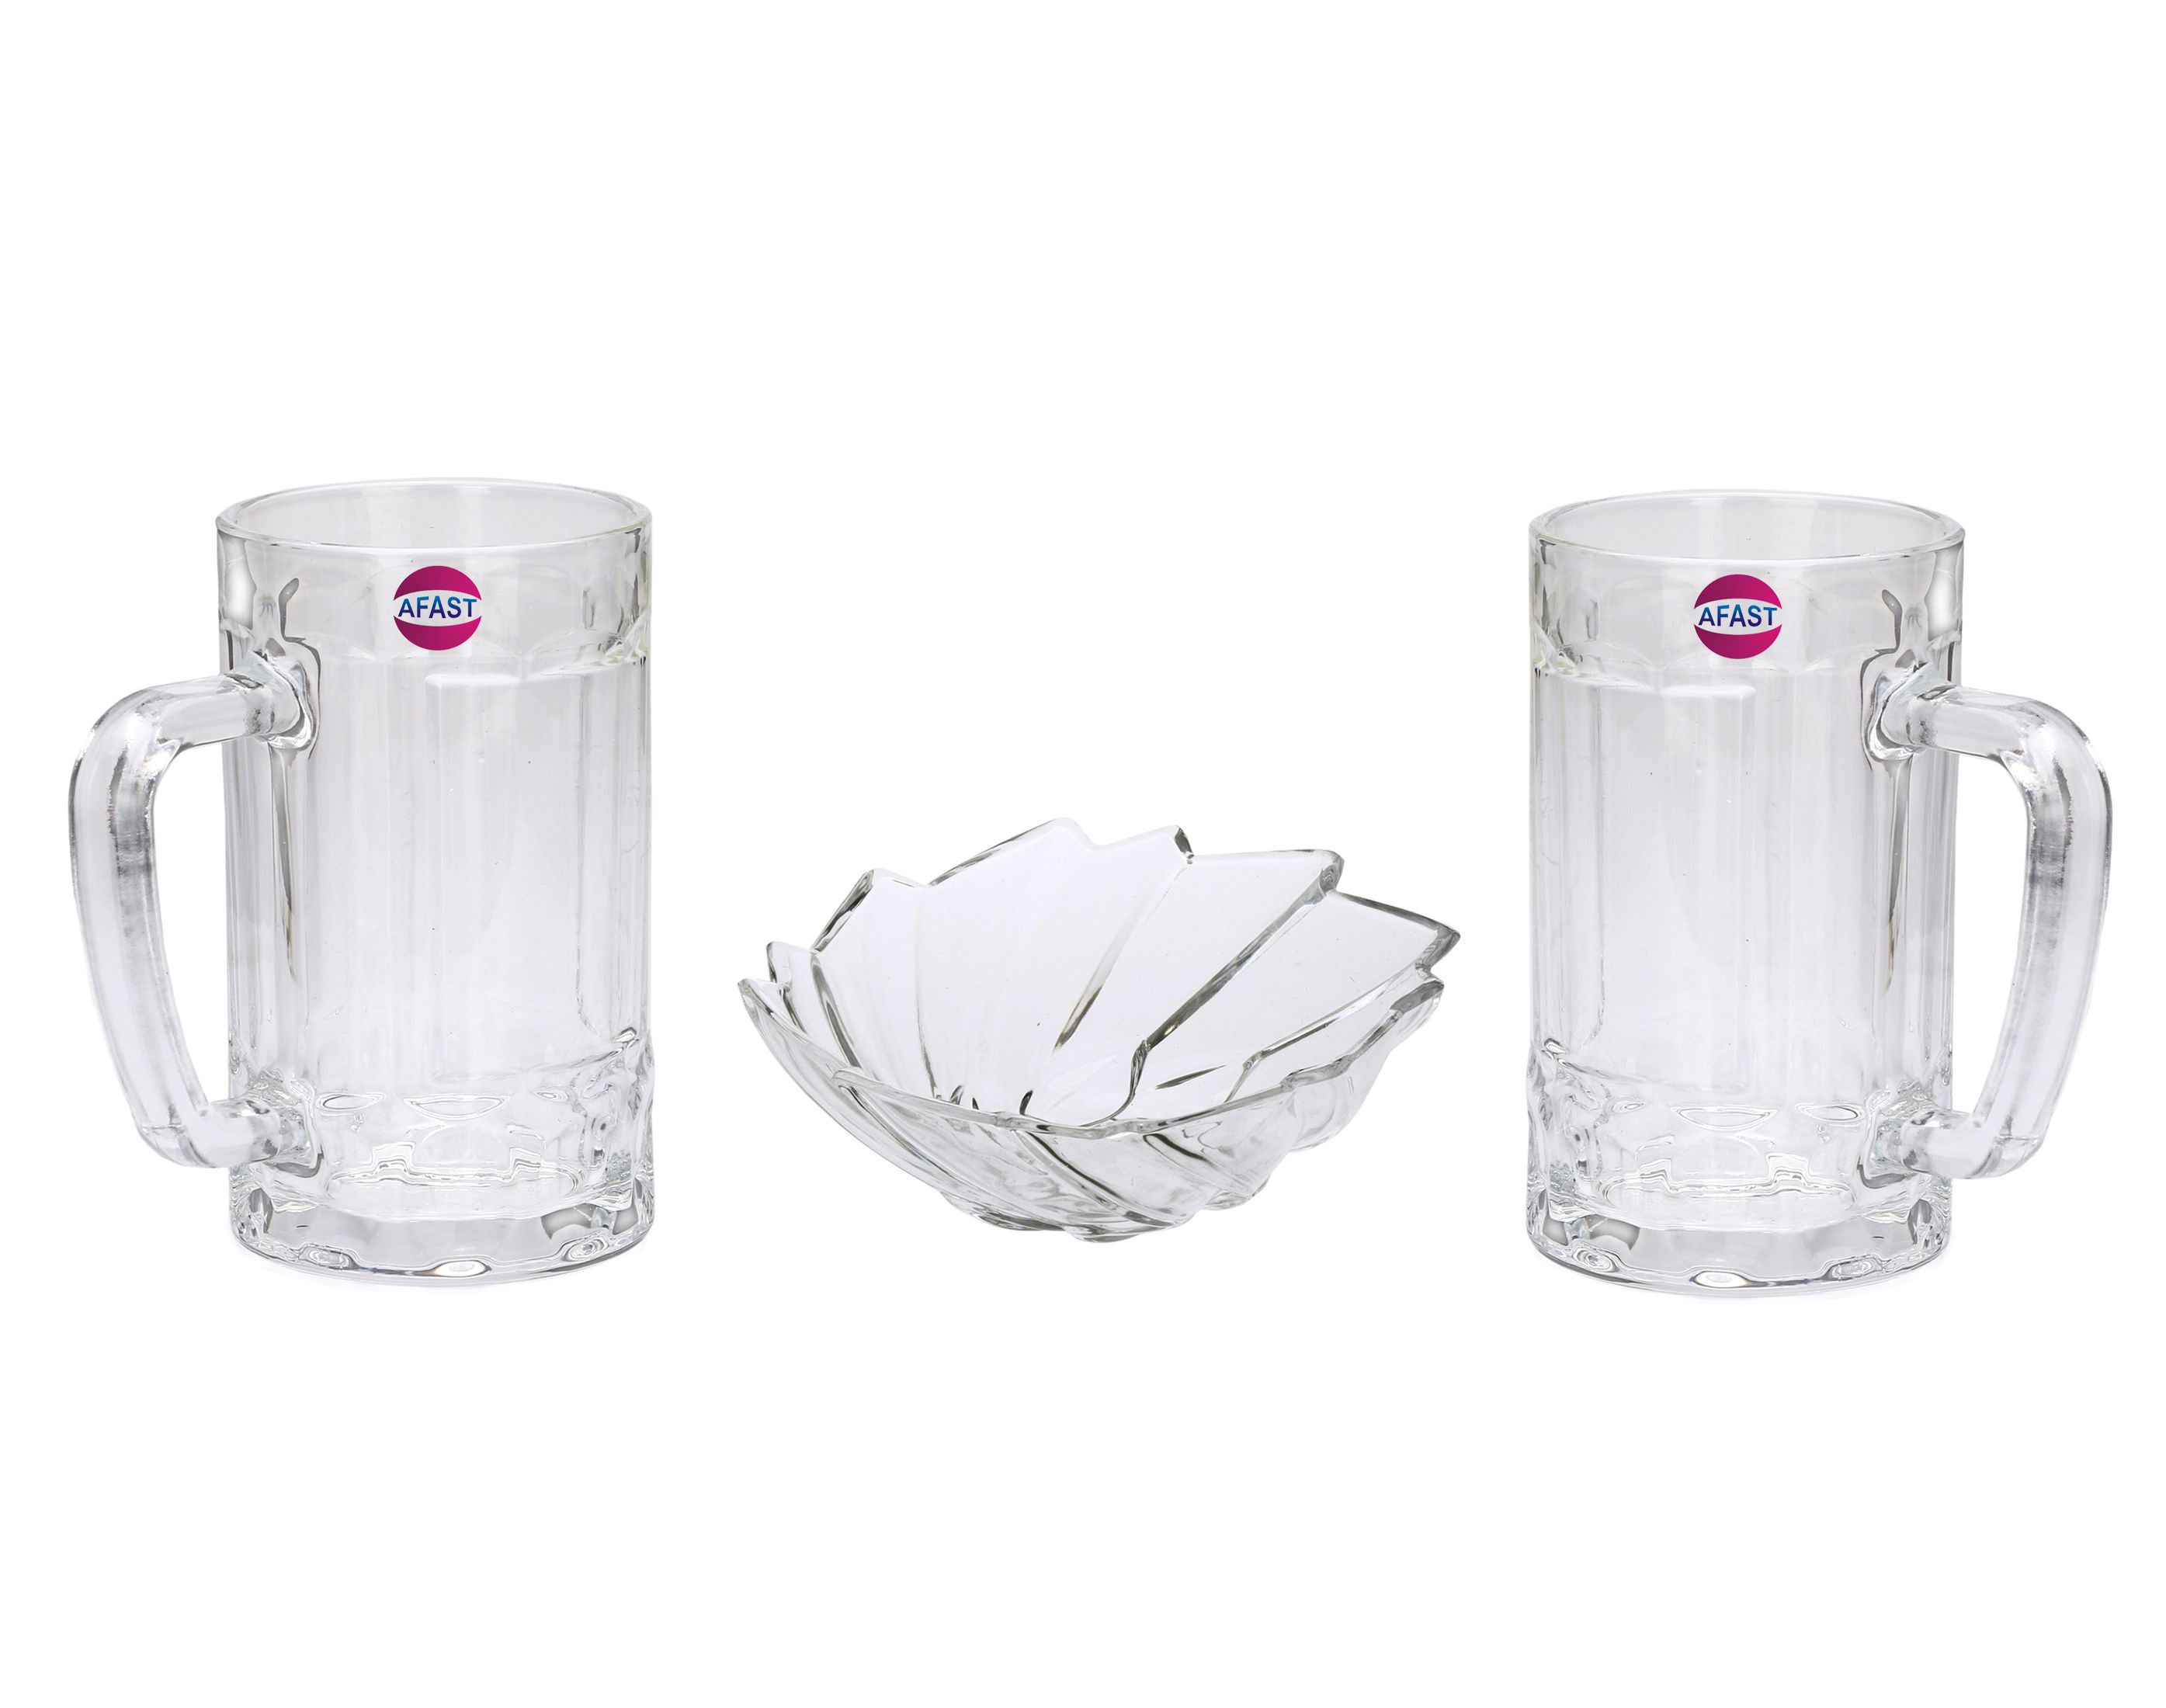     			Somil Glass GlassPlate, Transparent, Pack Of 3, 350 ml